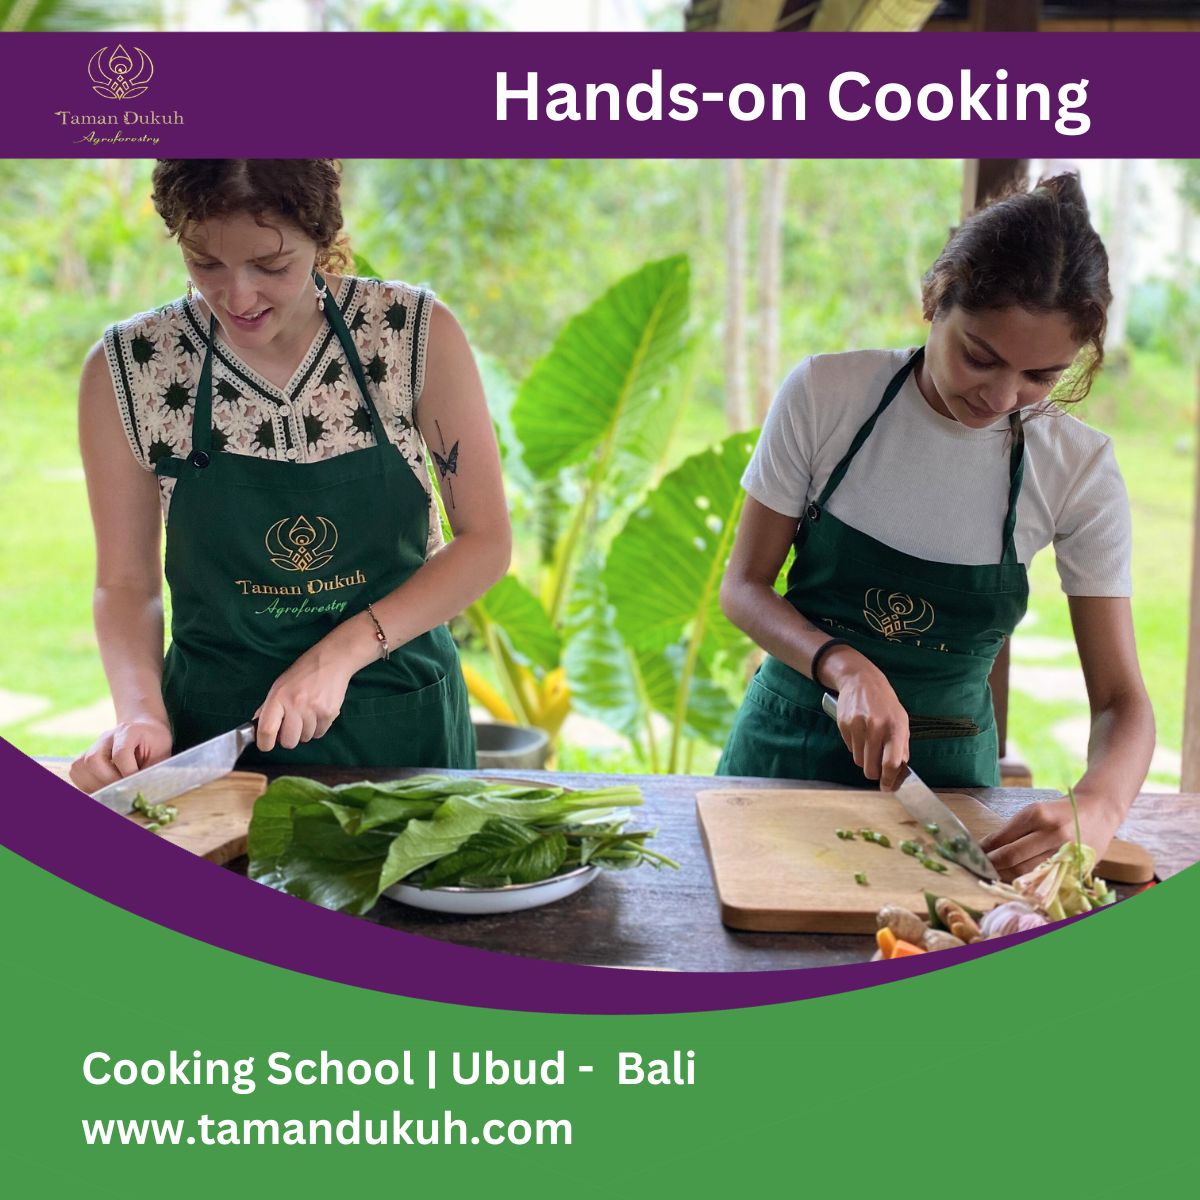 taman dukuh hands-on cooking